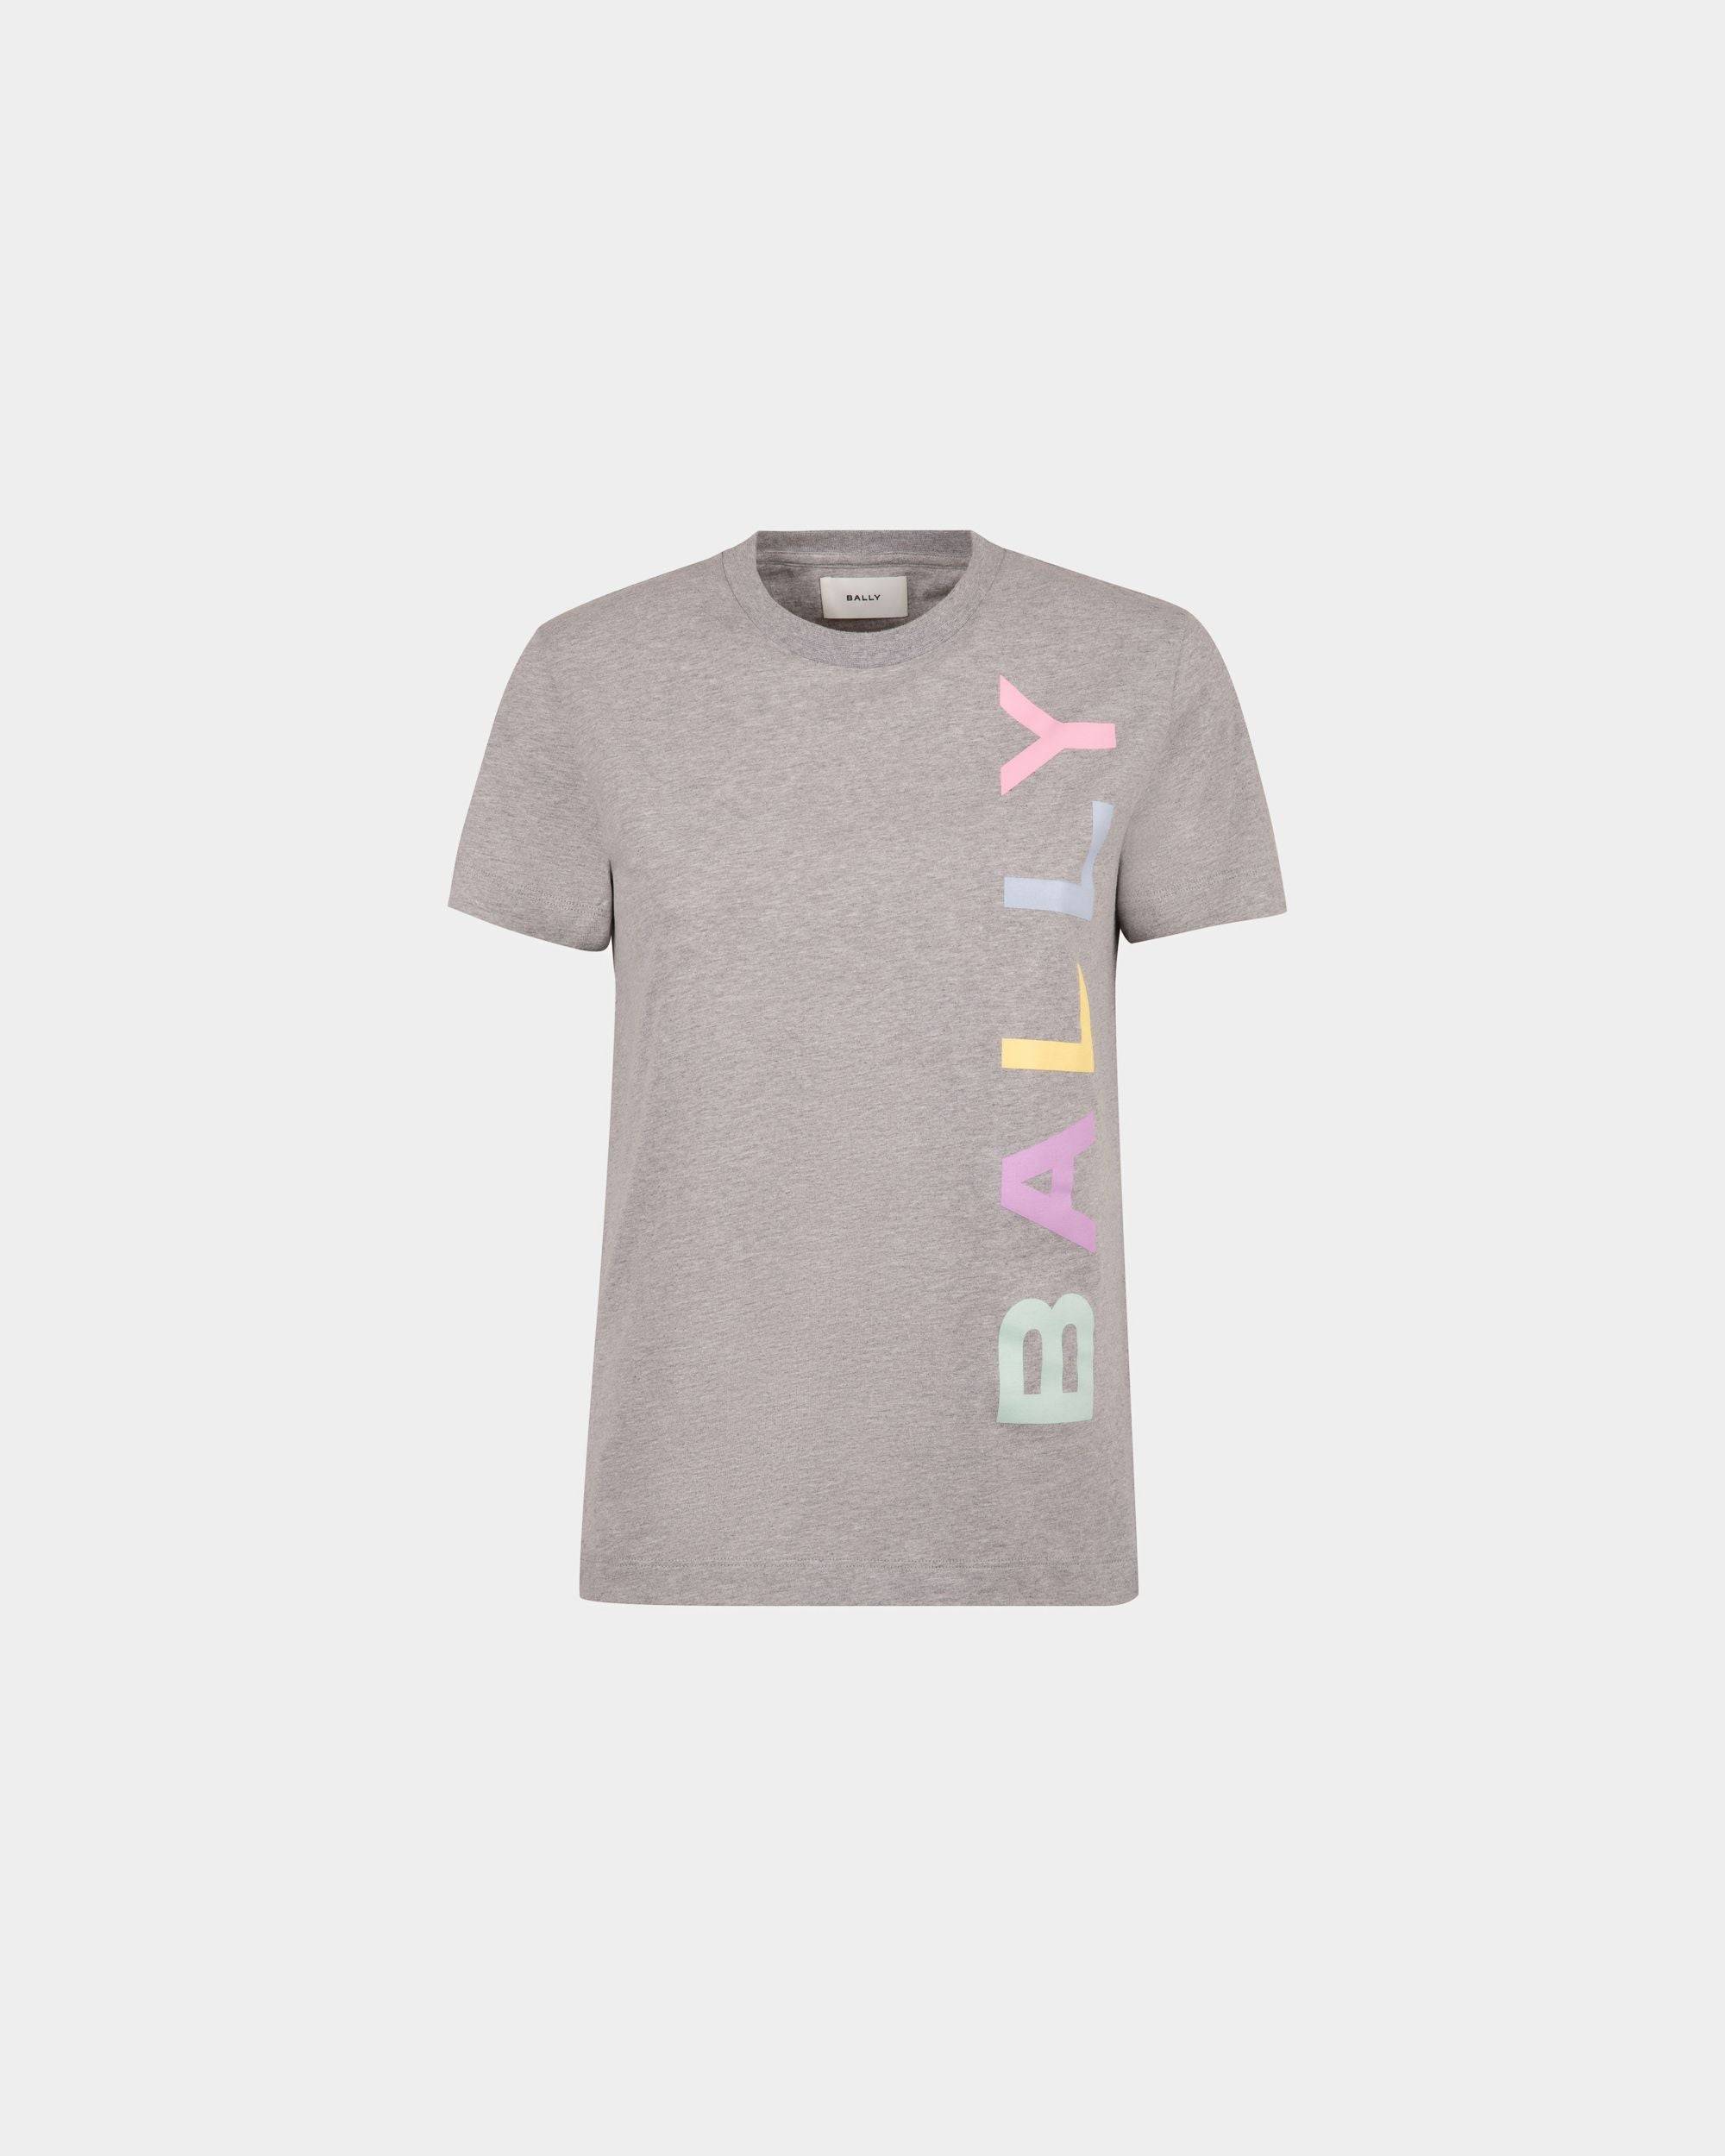 Women's T-Shirt in Mélange Gray Cotton | Bally | Still Life Front